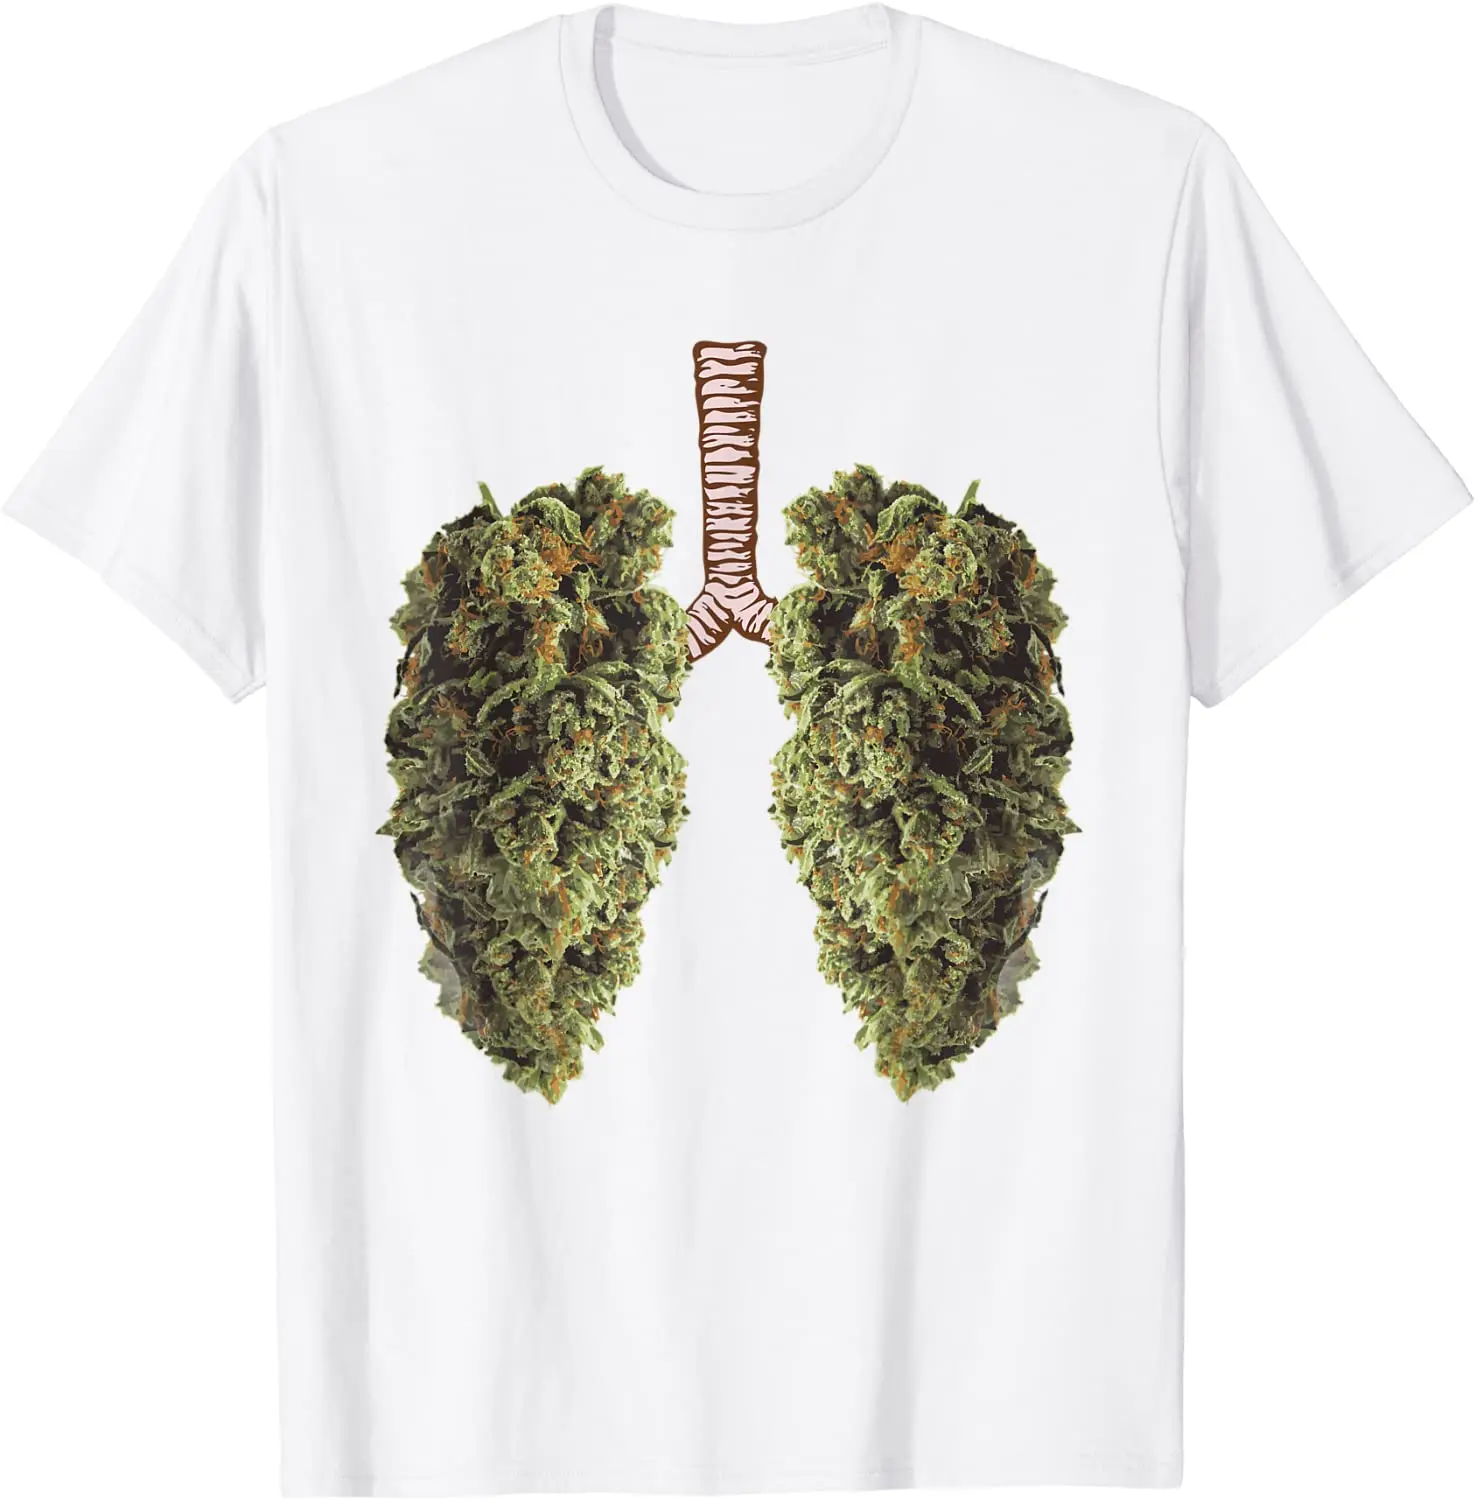 Komik Ot Akciğer Tomurcuk T-Shirt-THC Akciğer TShirt T-Shirt Sıcak Satış Öğrenci Üst T-Shirt Pamuk Tees Baskılı